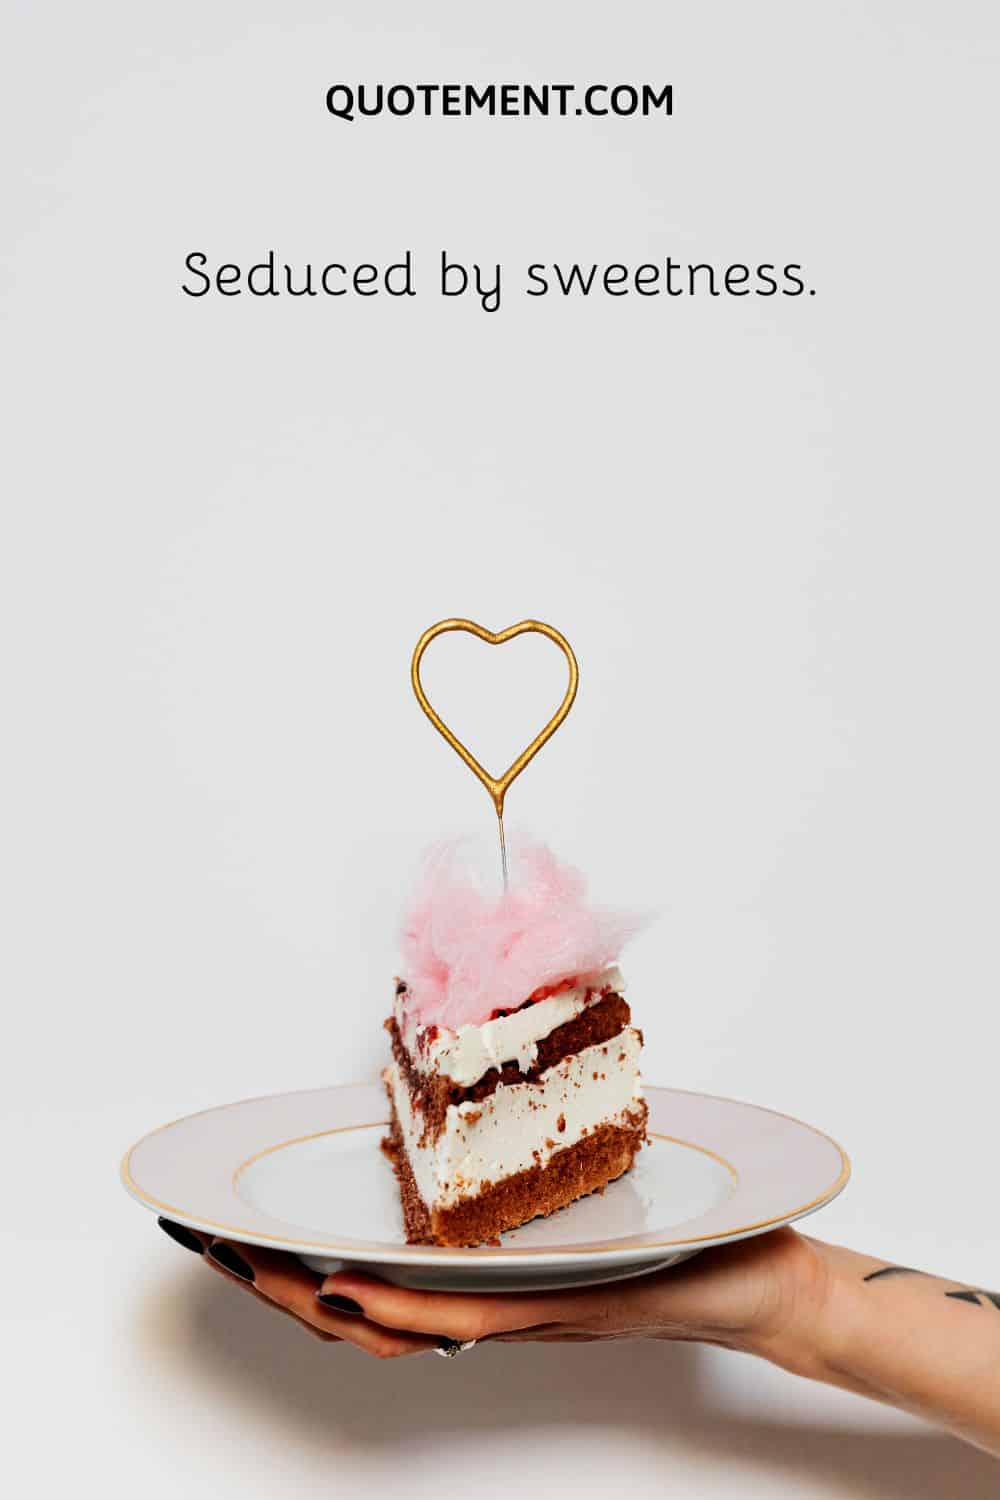 Seduced by sweetness.